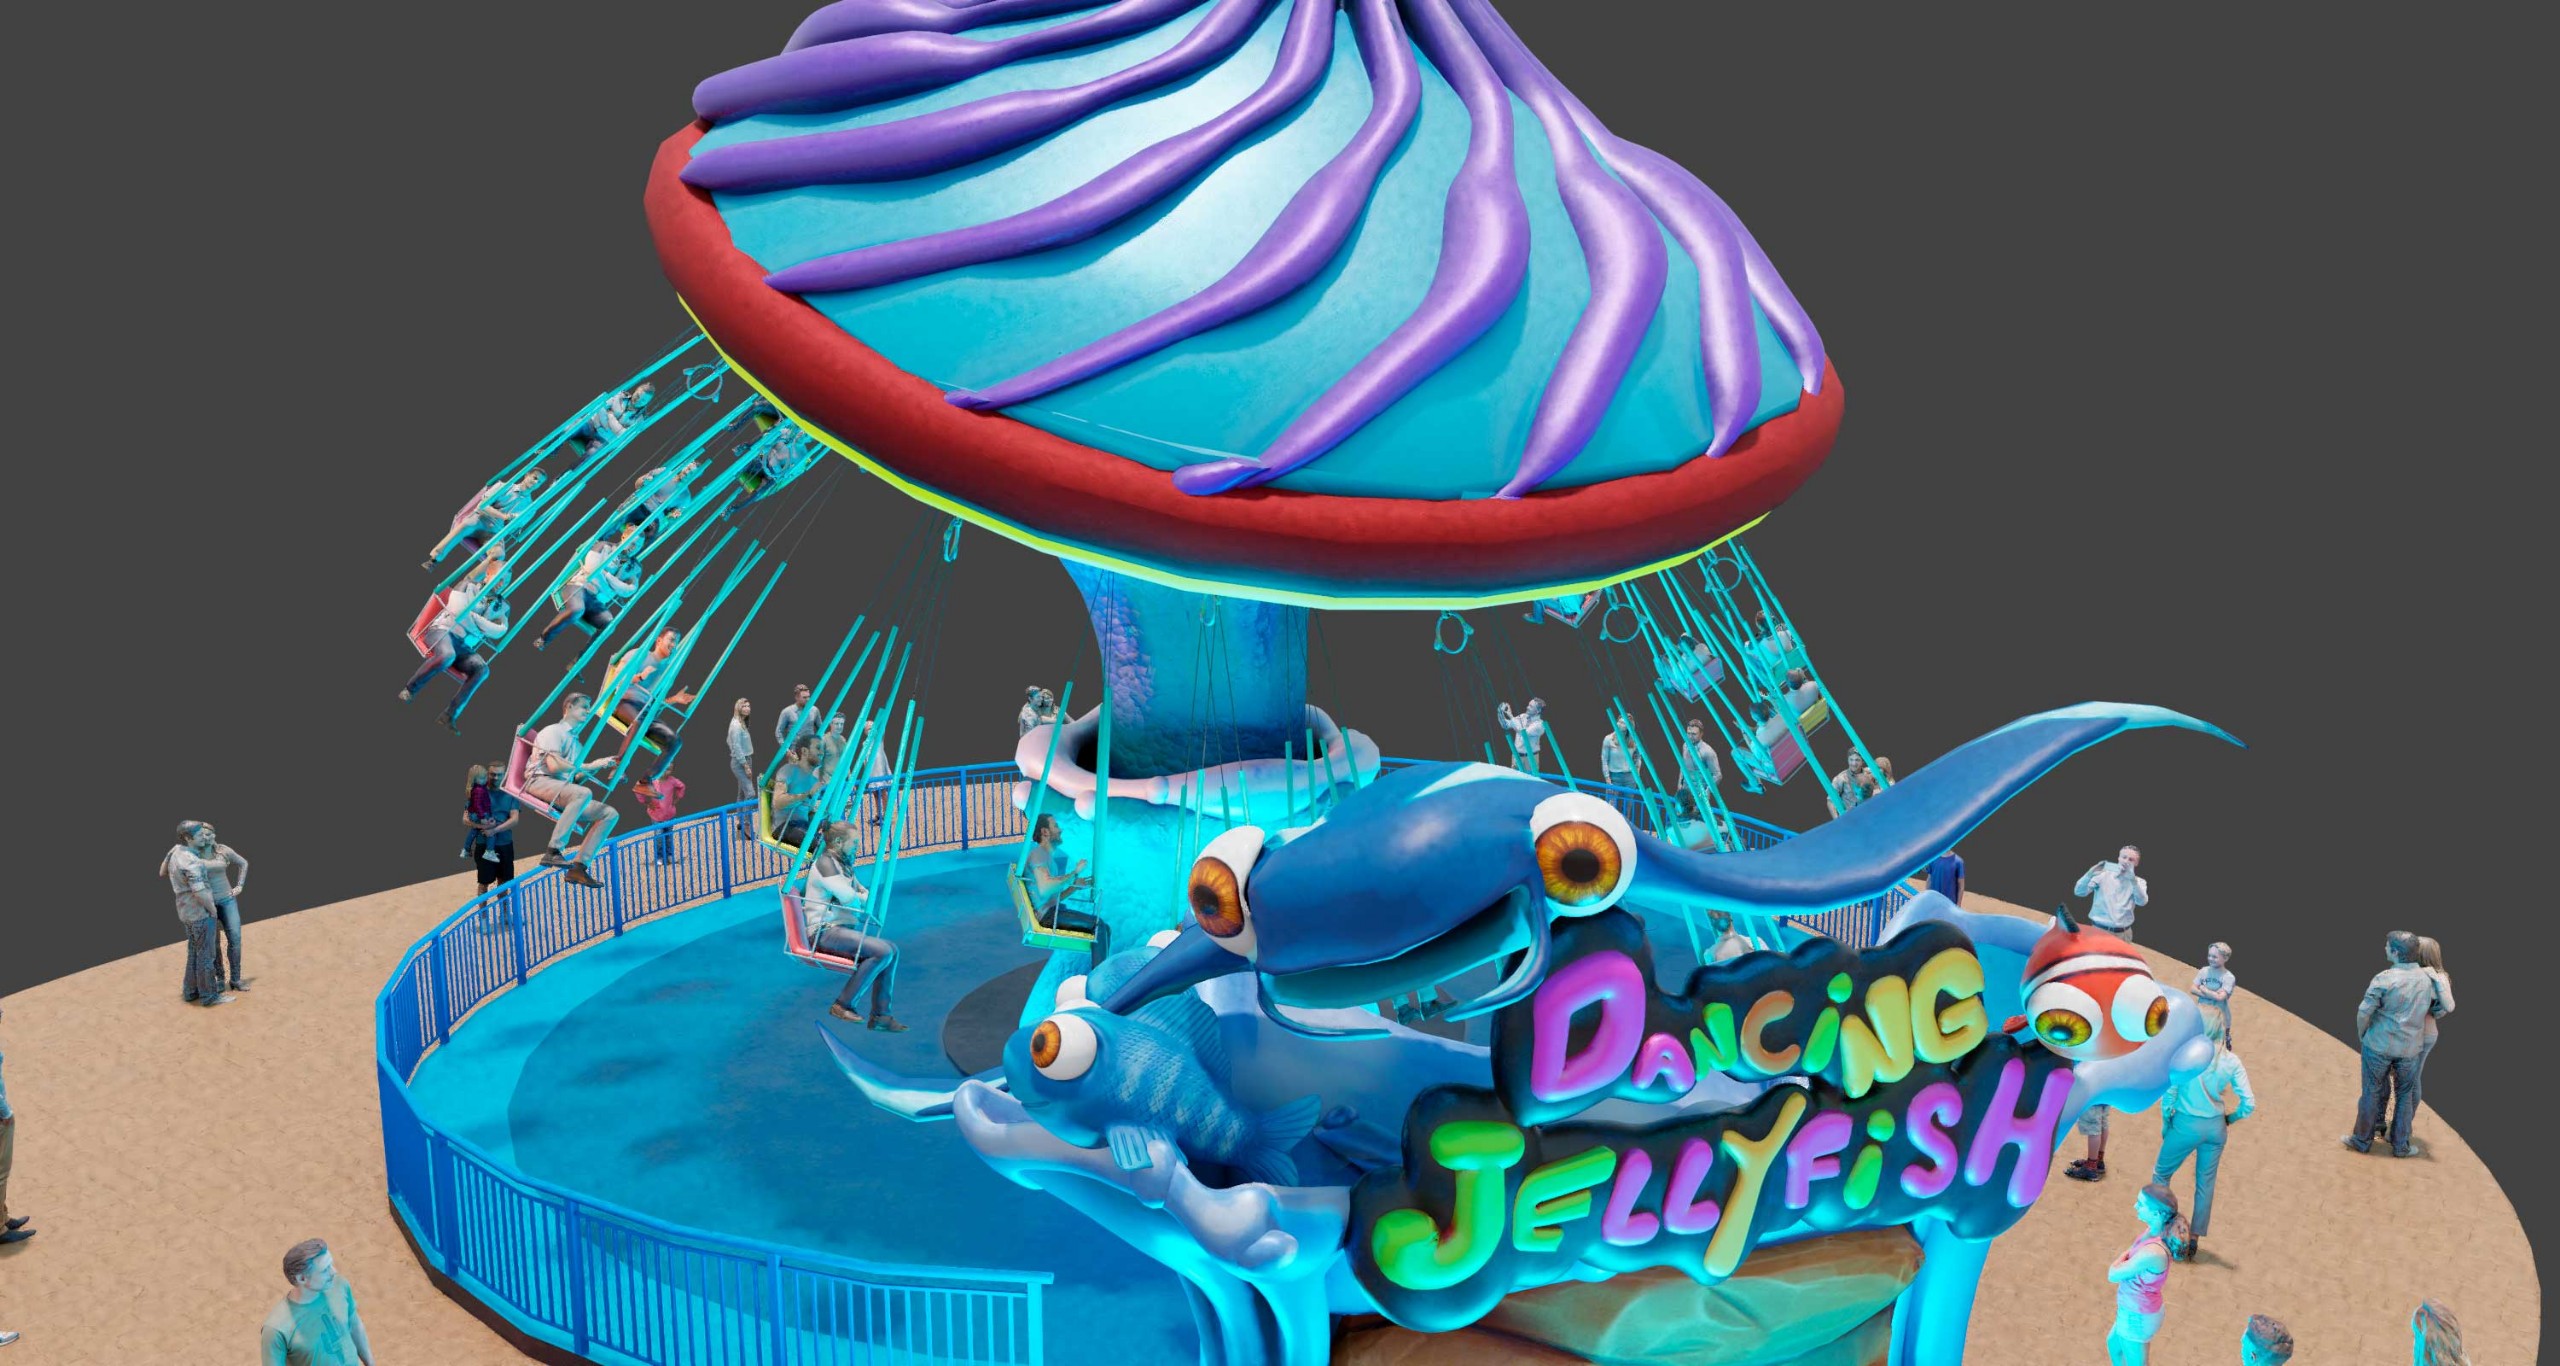  Swing ride dancing jellyfish